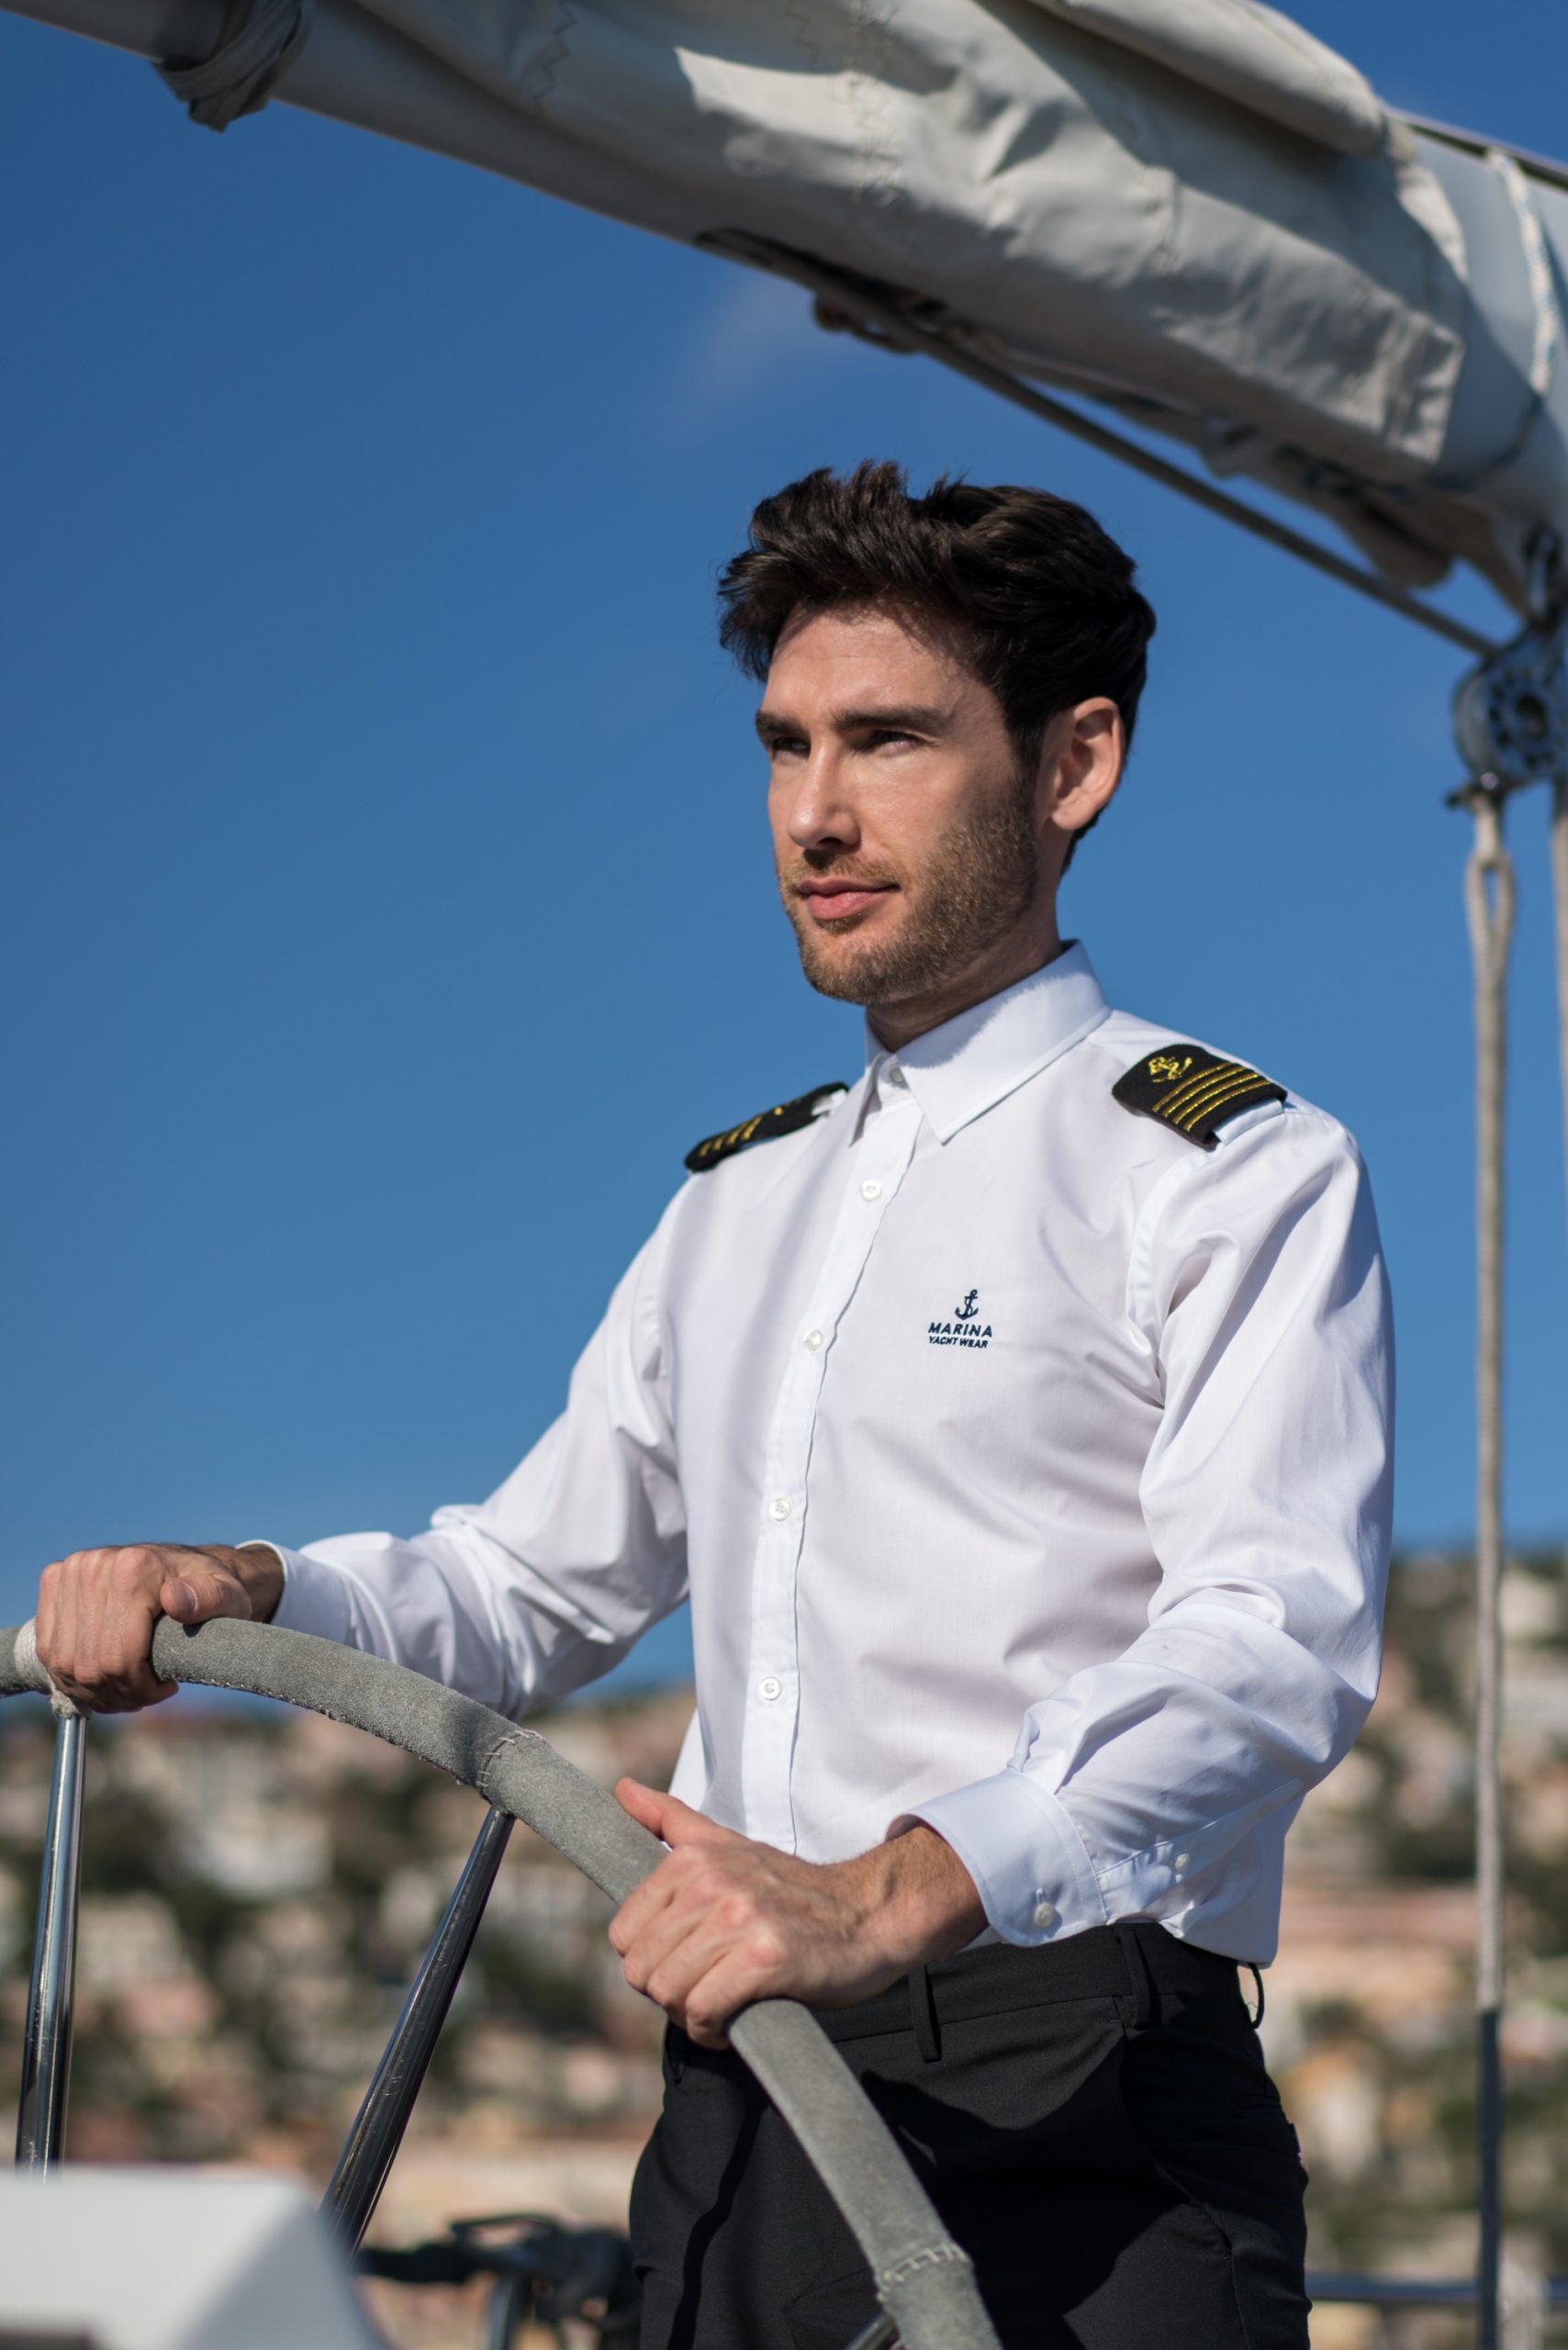 Yacht captain Dress shirt